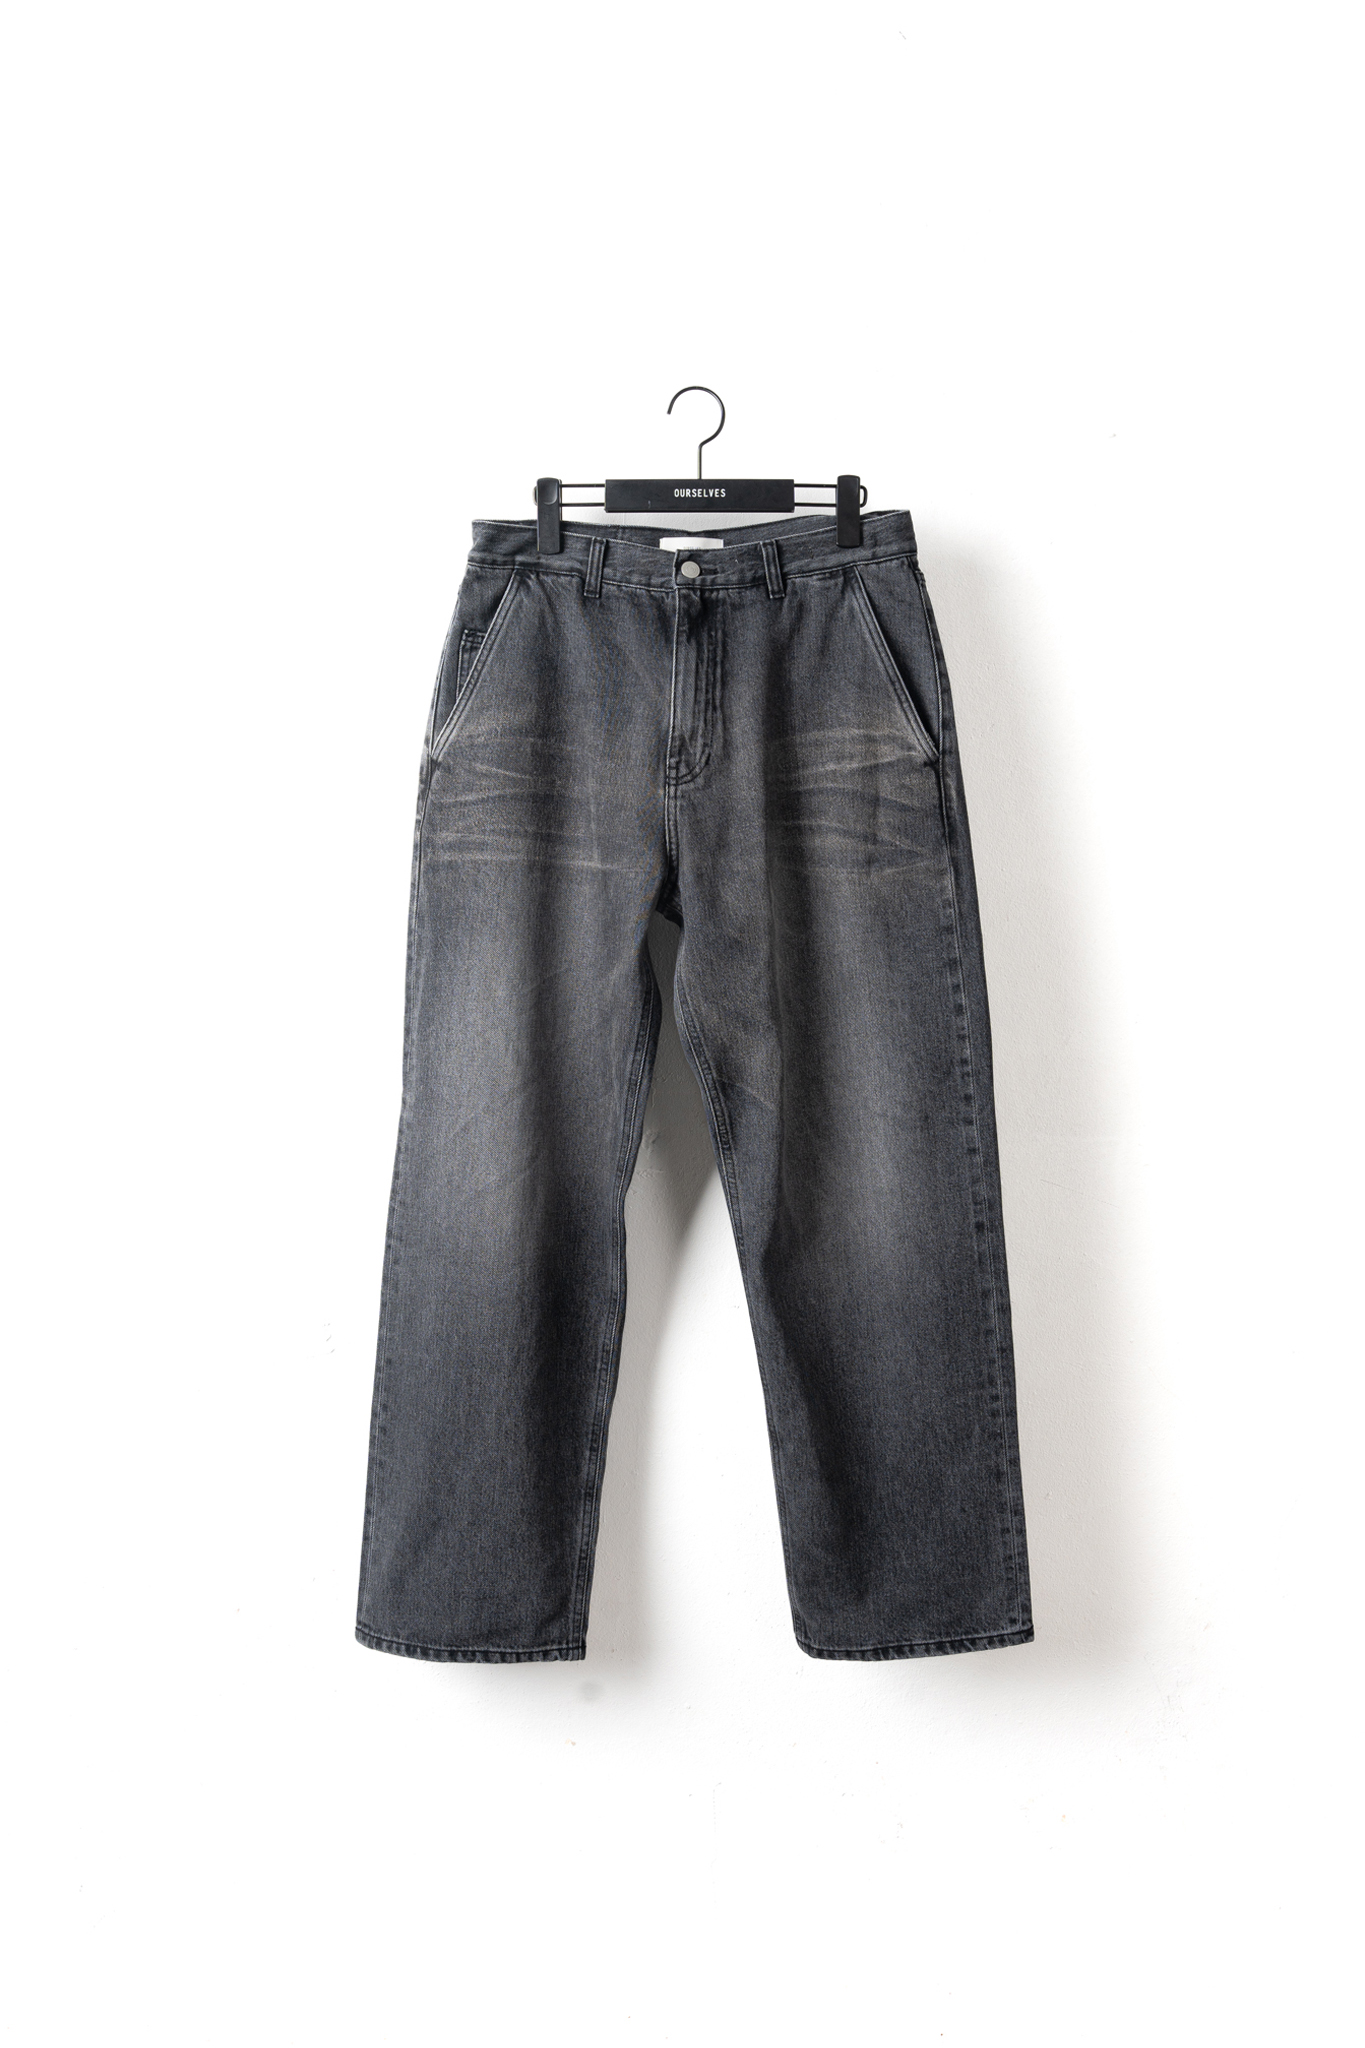 [Restock] 24SS Organic Cotton Relaxed Denim Pants - Bleached Black